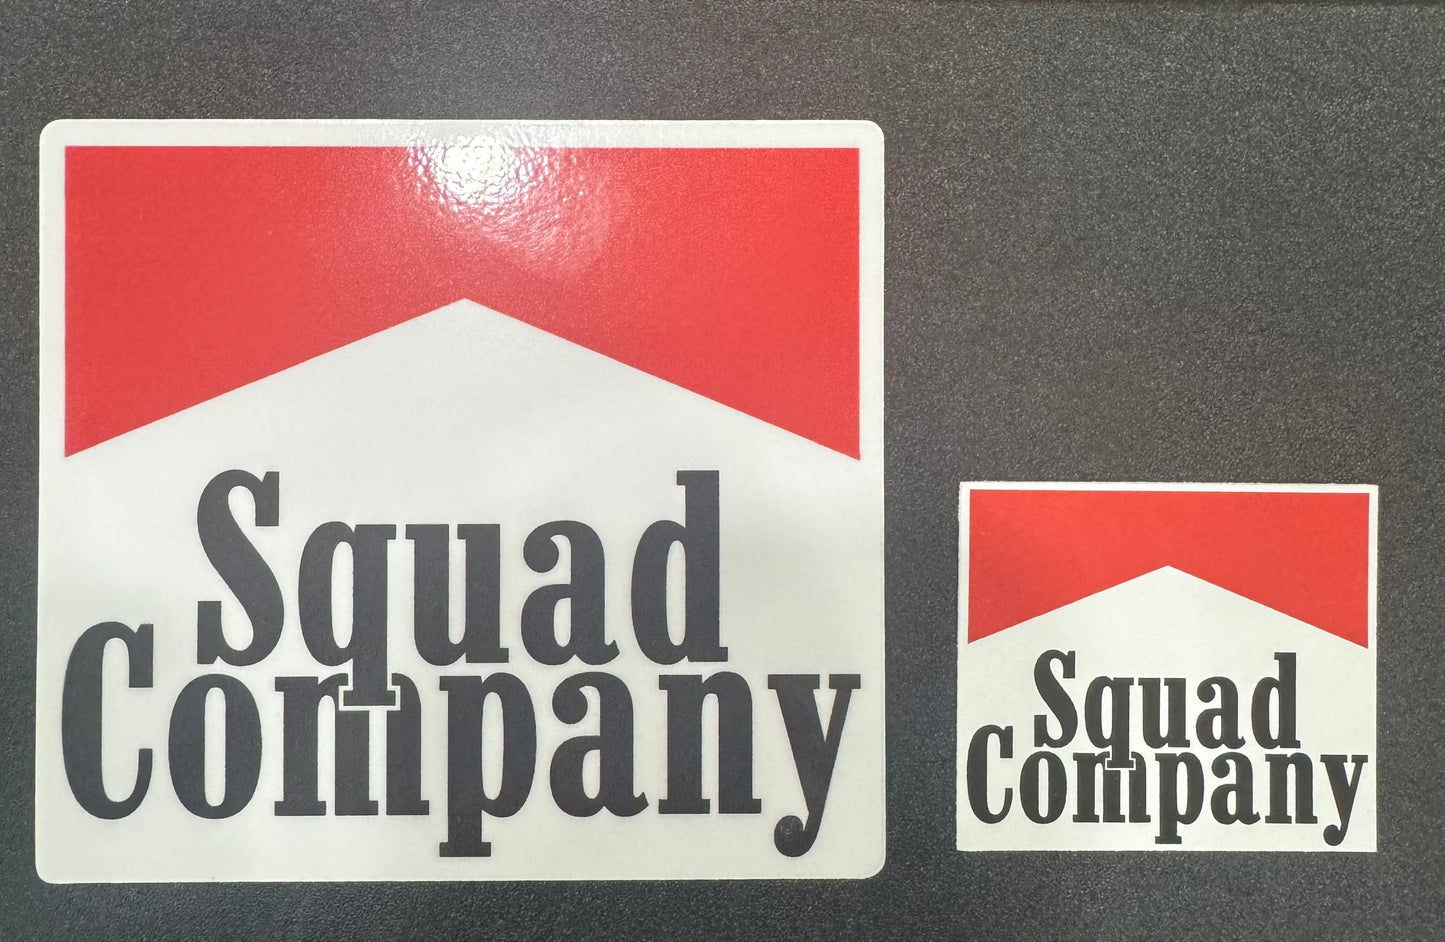 Squad Company